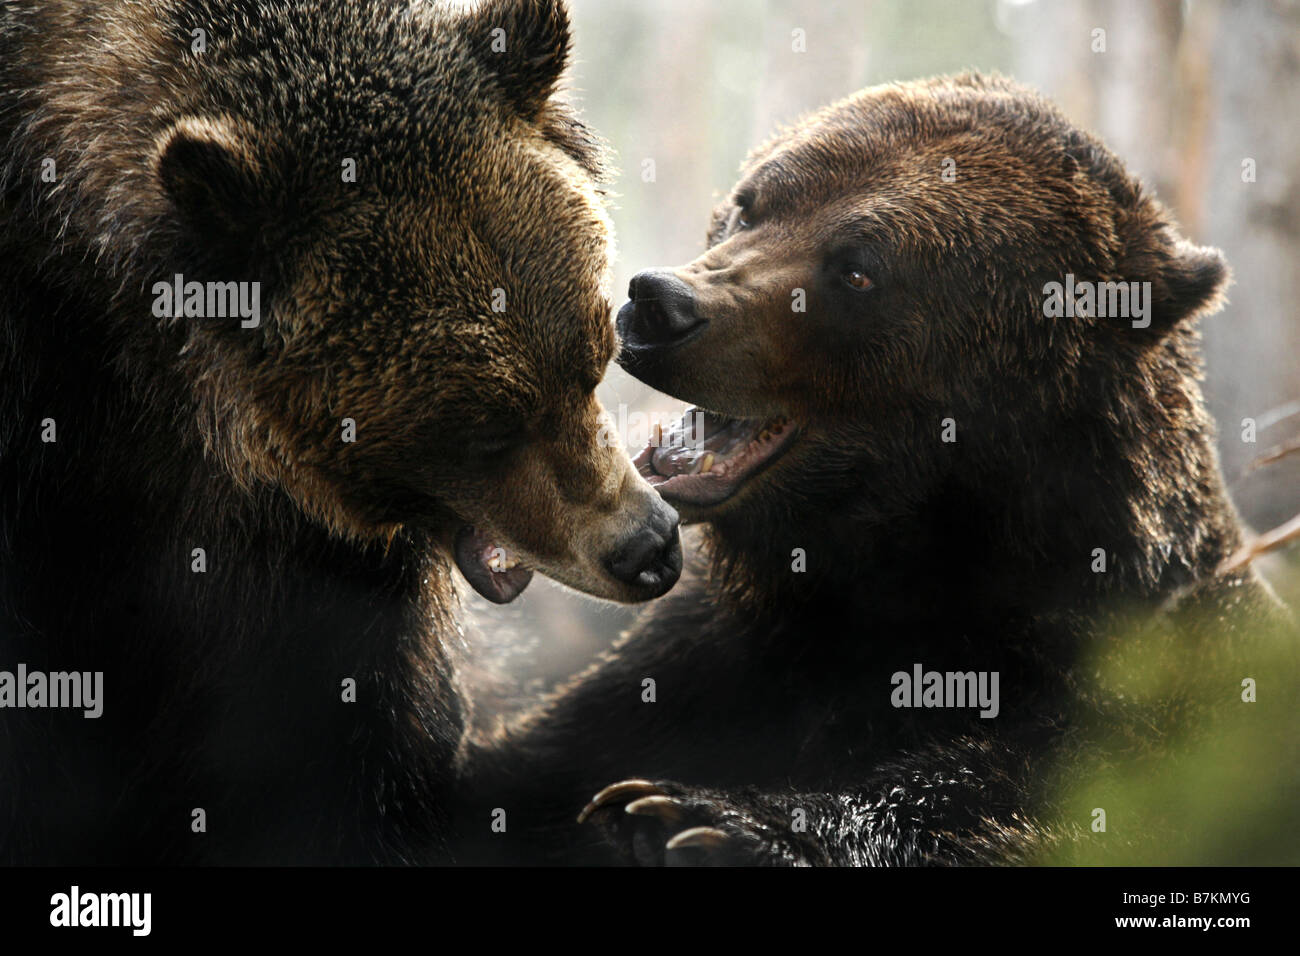 Grizzly-Bären, Grouse Mountain Refugium, North Vancouver, Britisch-Kolumbien, Kanada Stockfoto